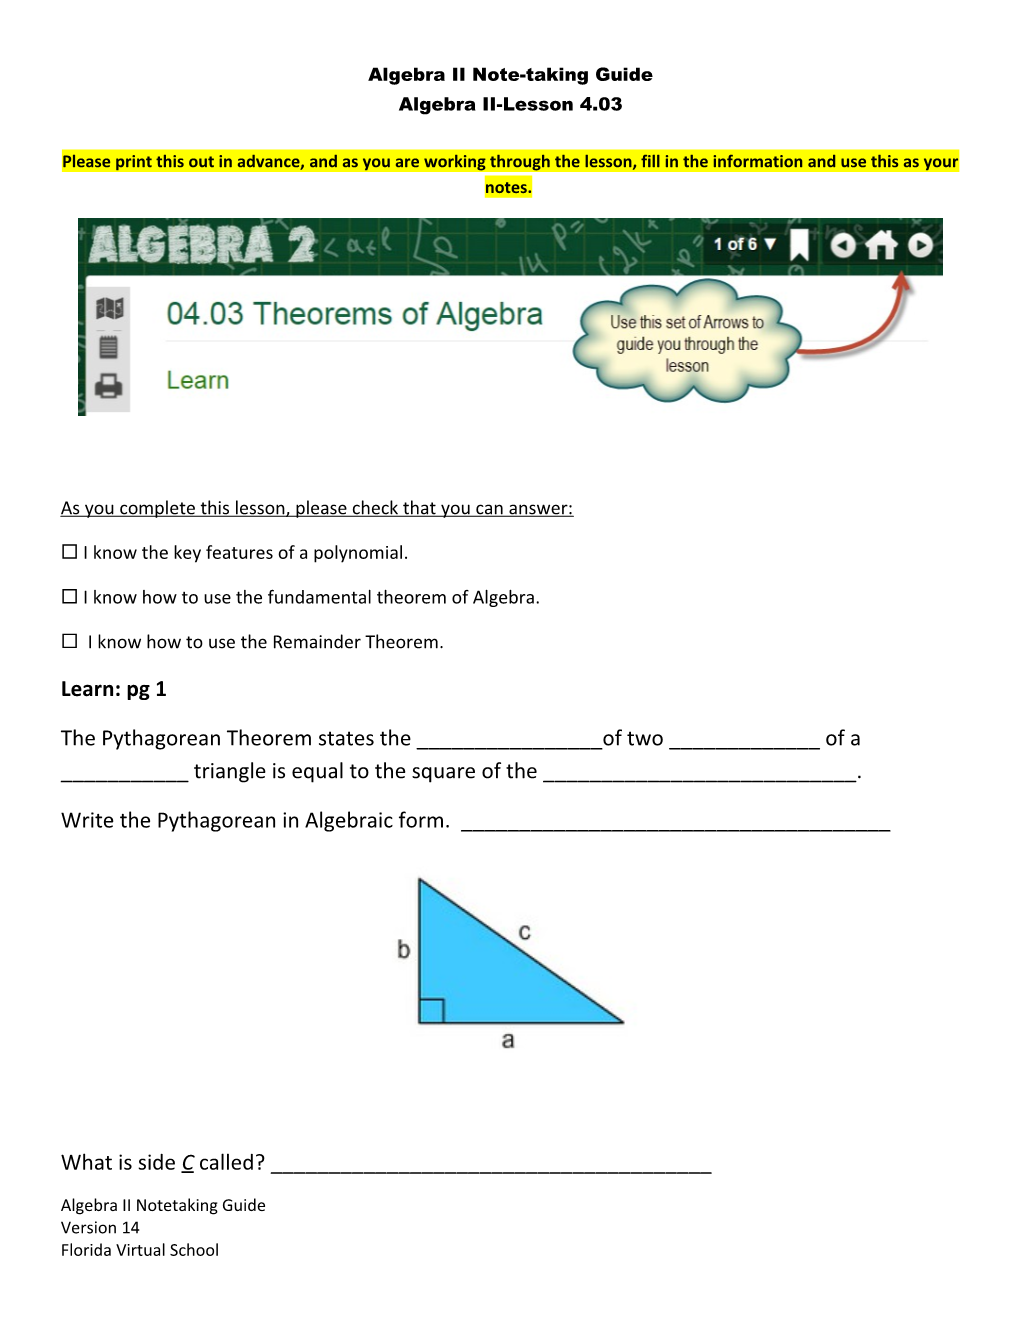 Algebra II Note-Taking Guide